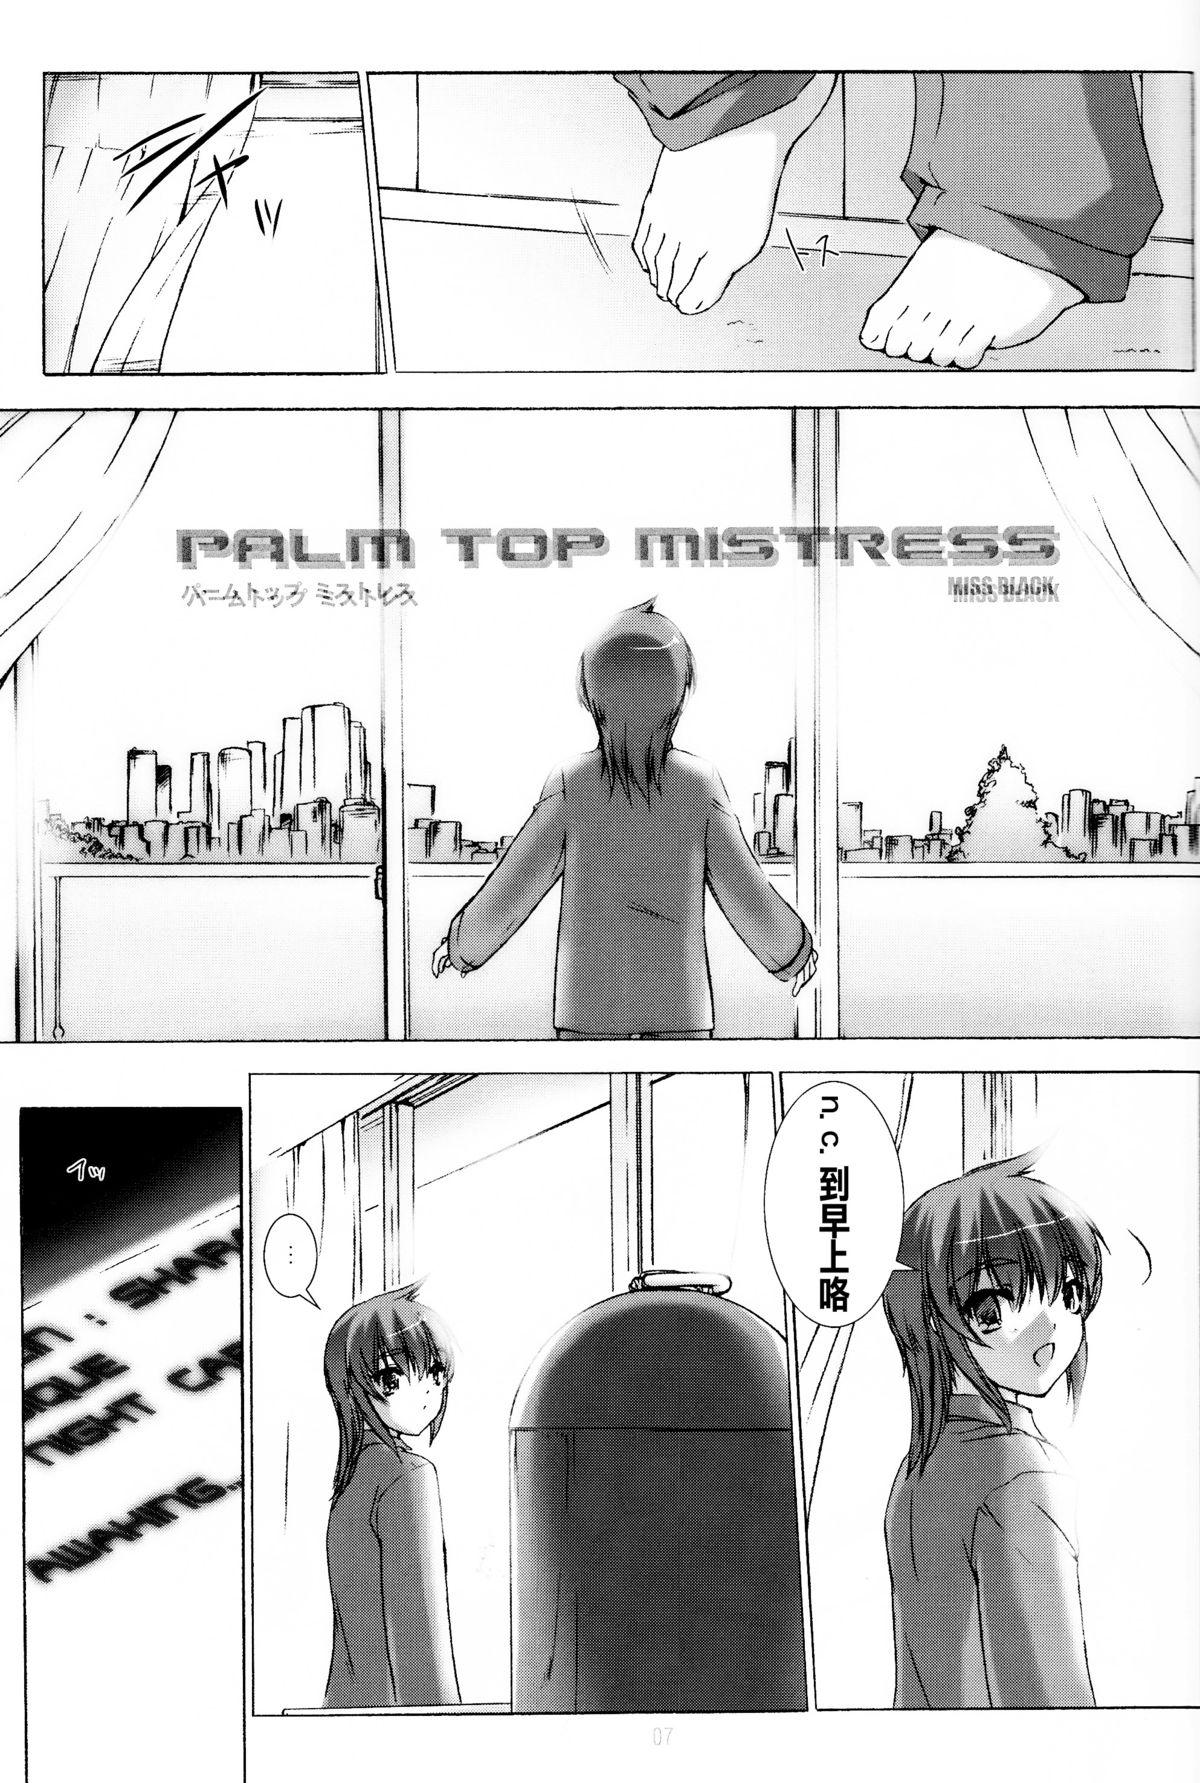 Cruising Palm top mistress - Busou shinki Couples - Page 9